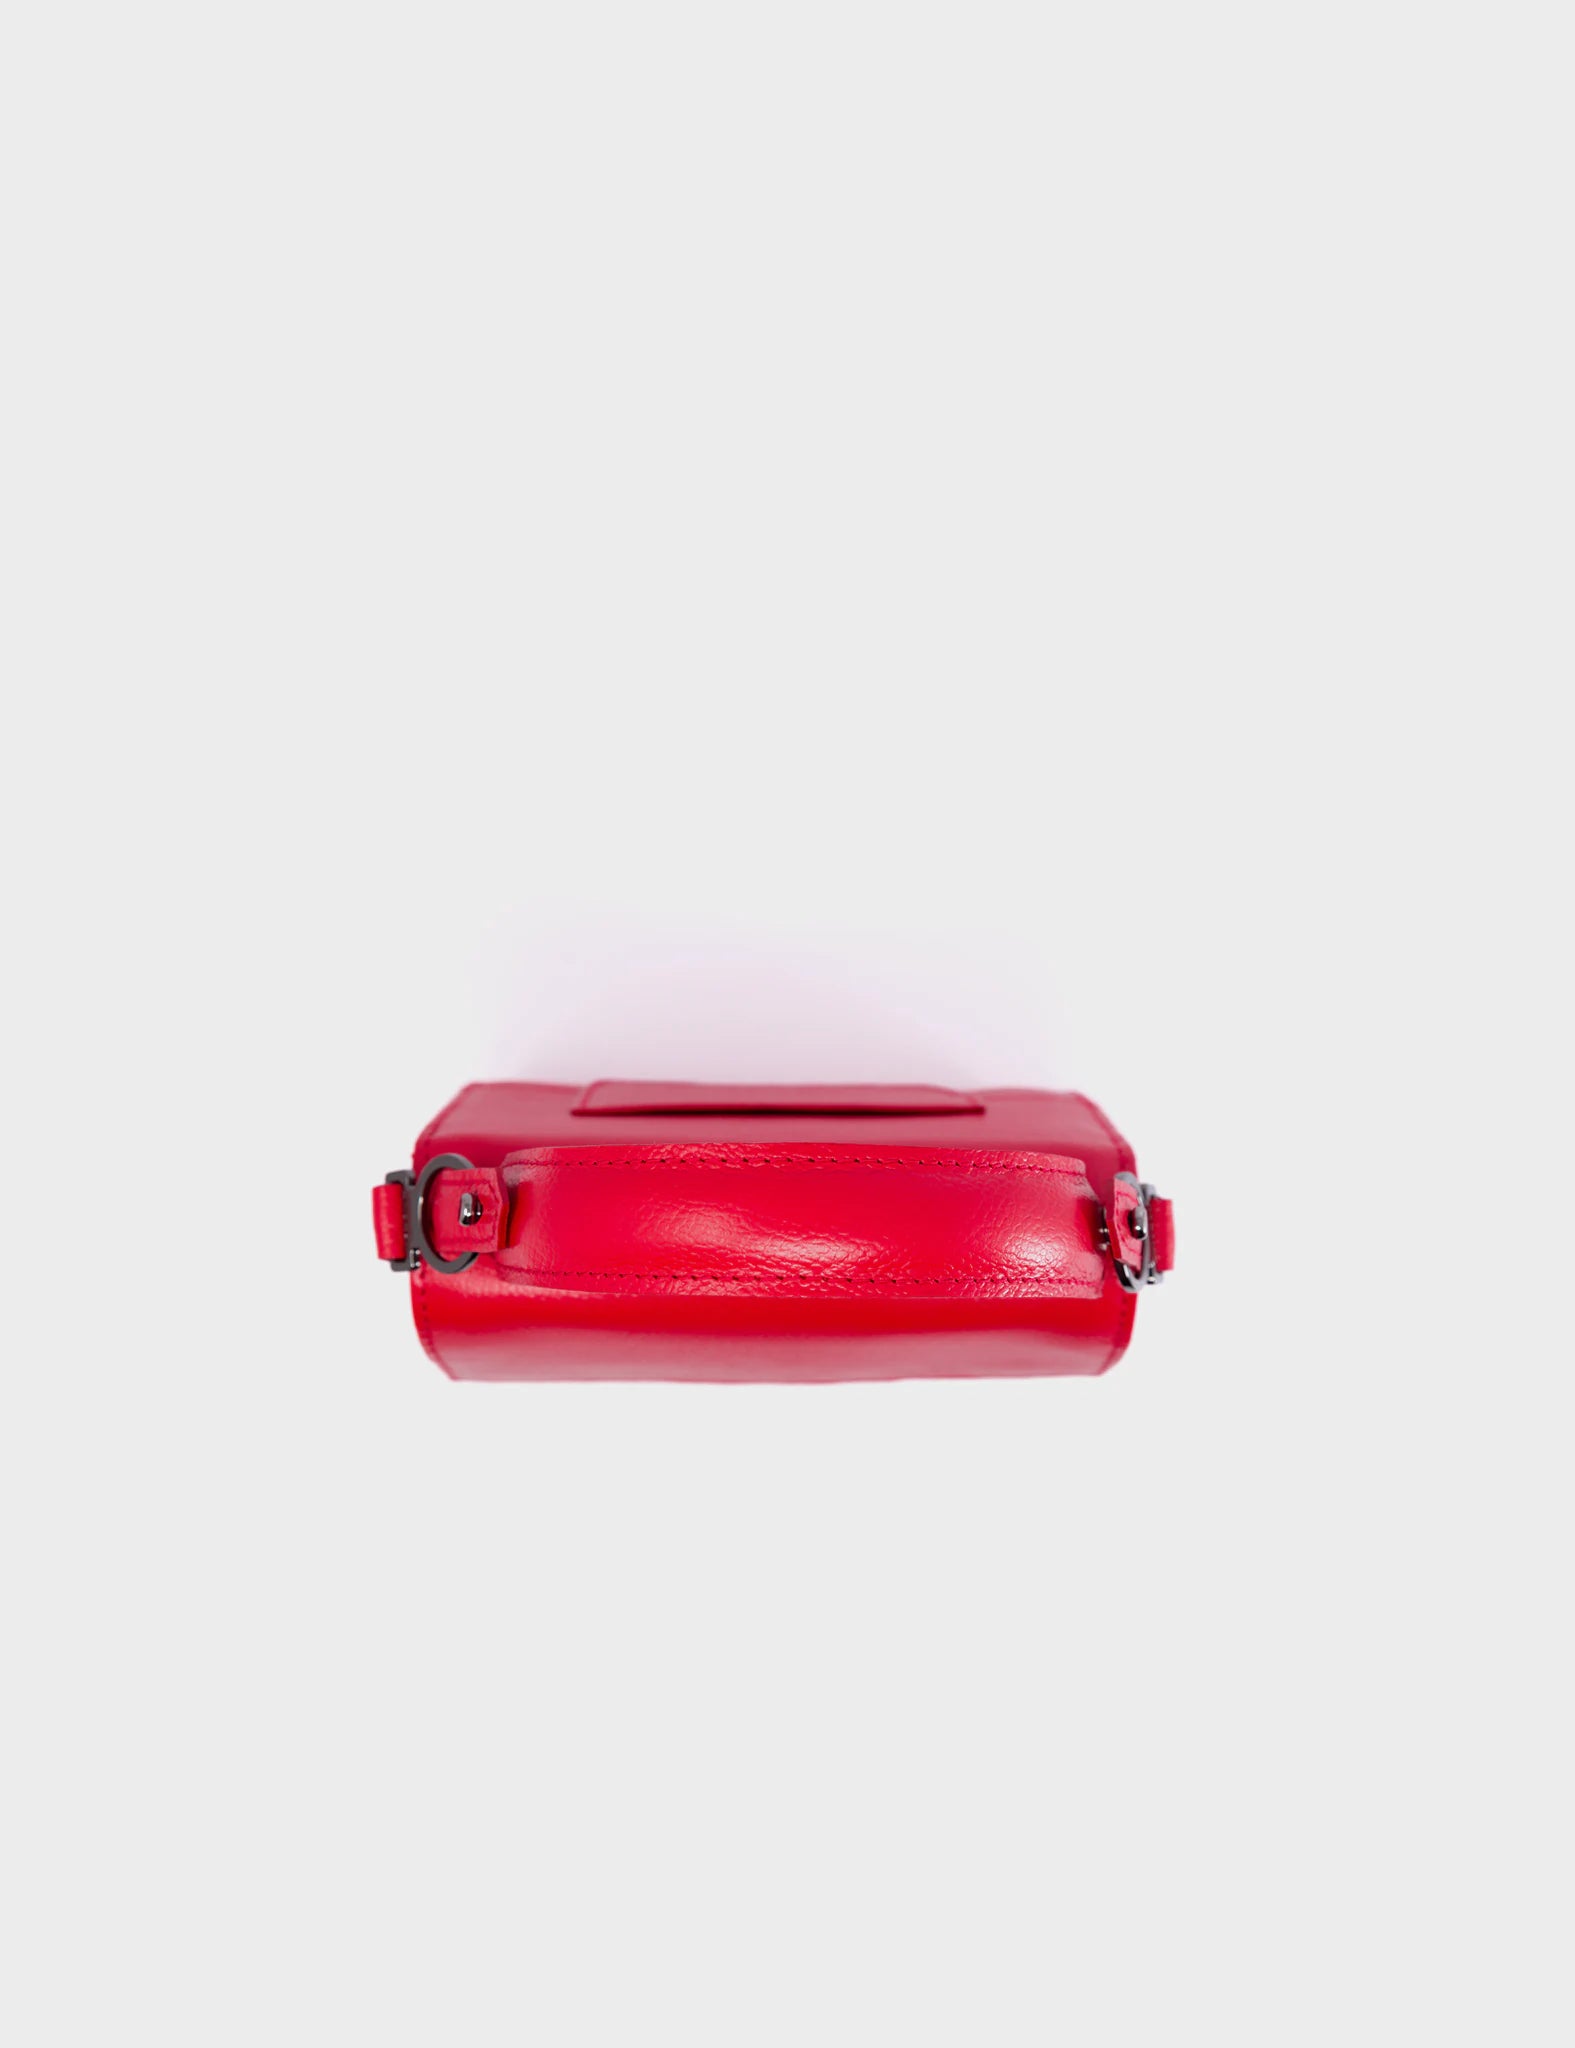 Anastasio Micro Crossbody Handbag Red Leather - Eyes Embroidery - Top View